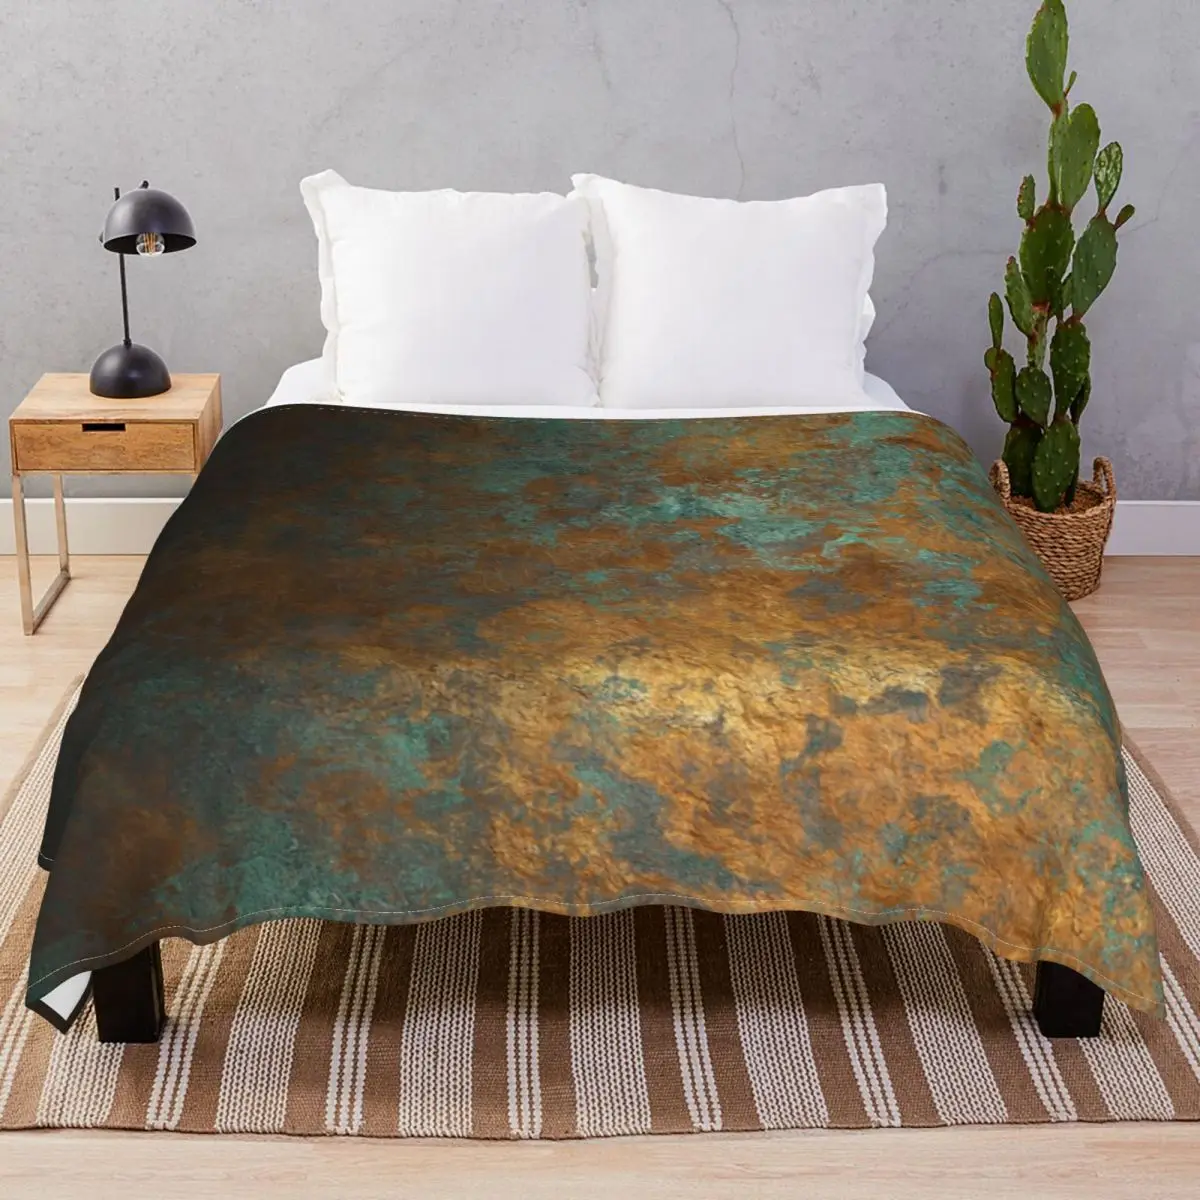 Oxidized Copper Blanket Fleece Autumn/Winter Soft Throw Blankets for Bed Sofa Travel Cinema